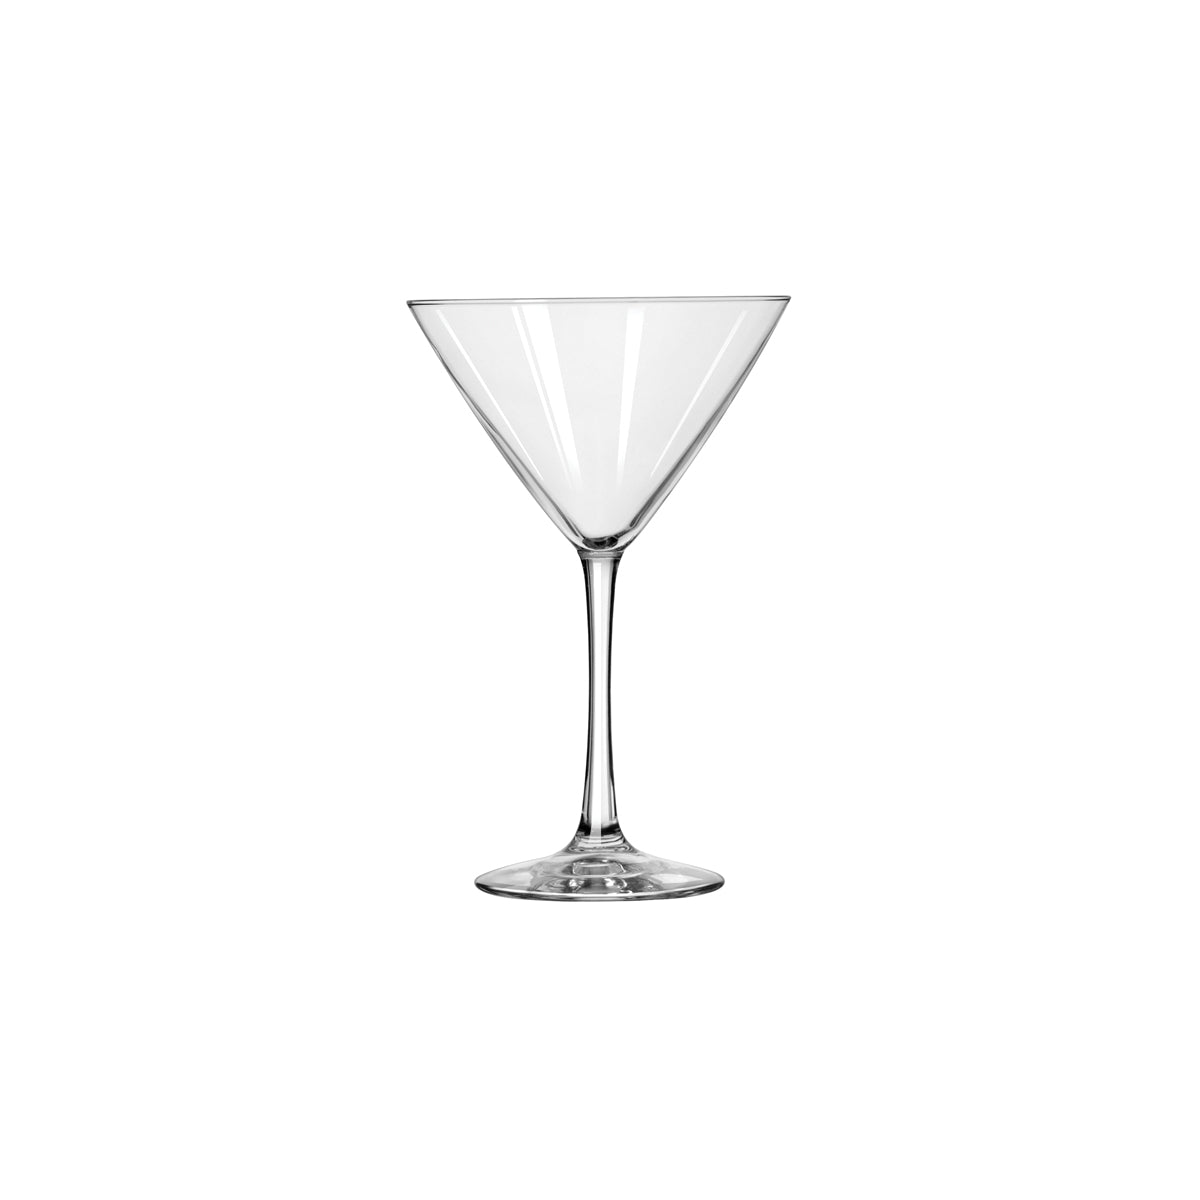 Libbey Martini Glass - Vina, 355ml: Pack of 12